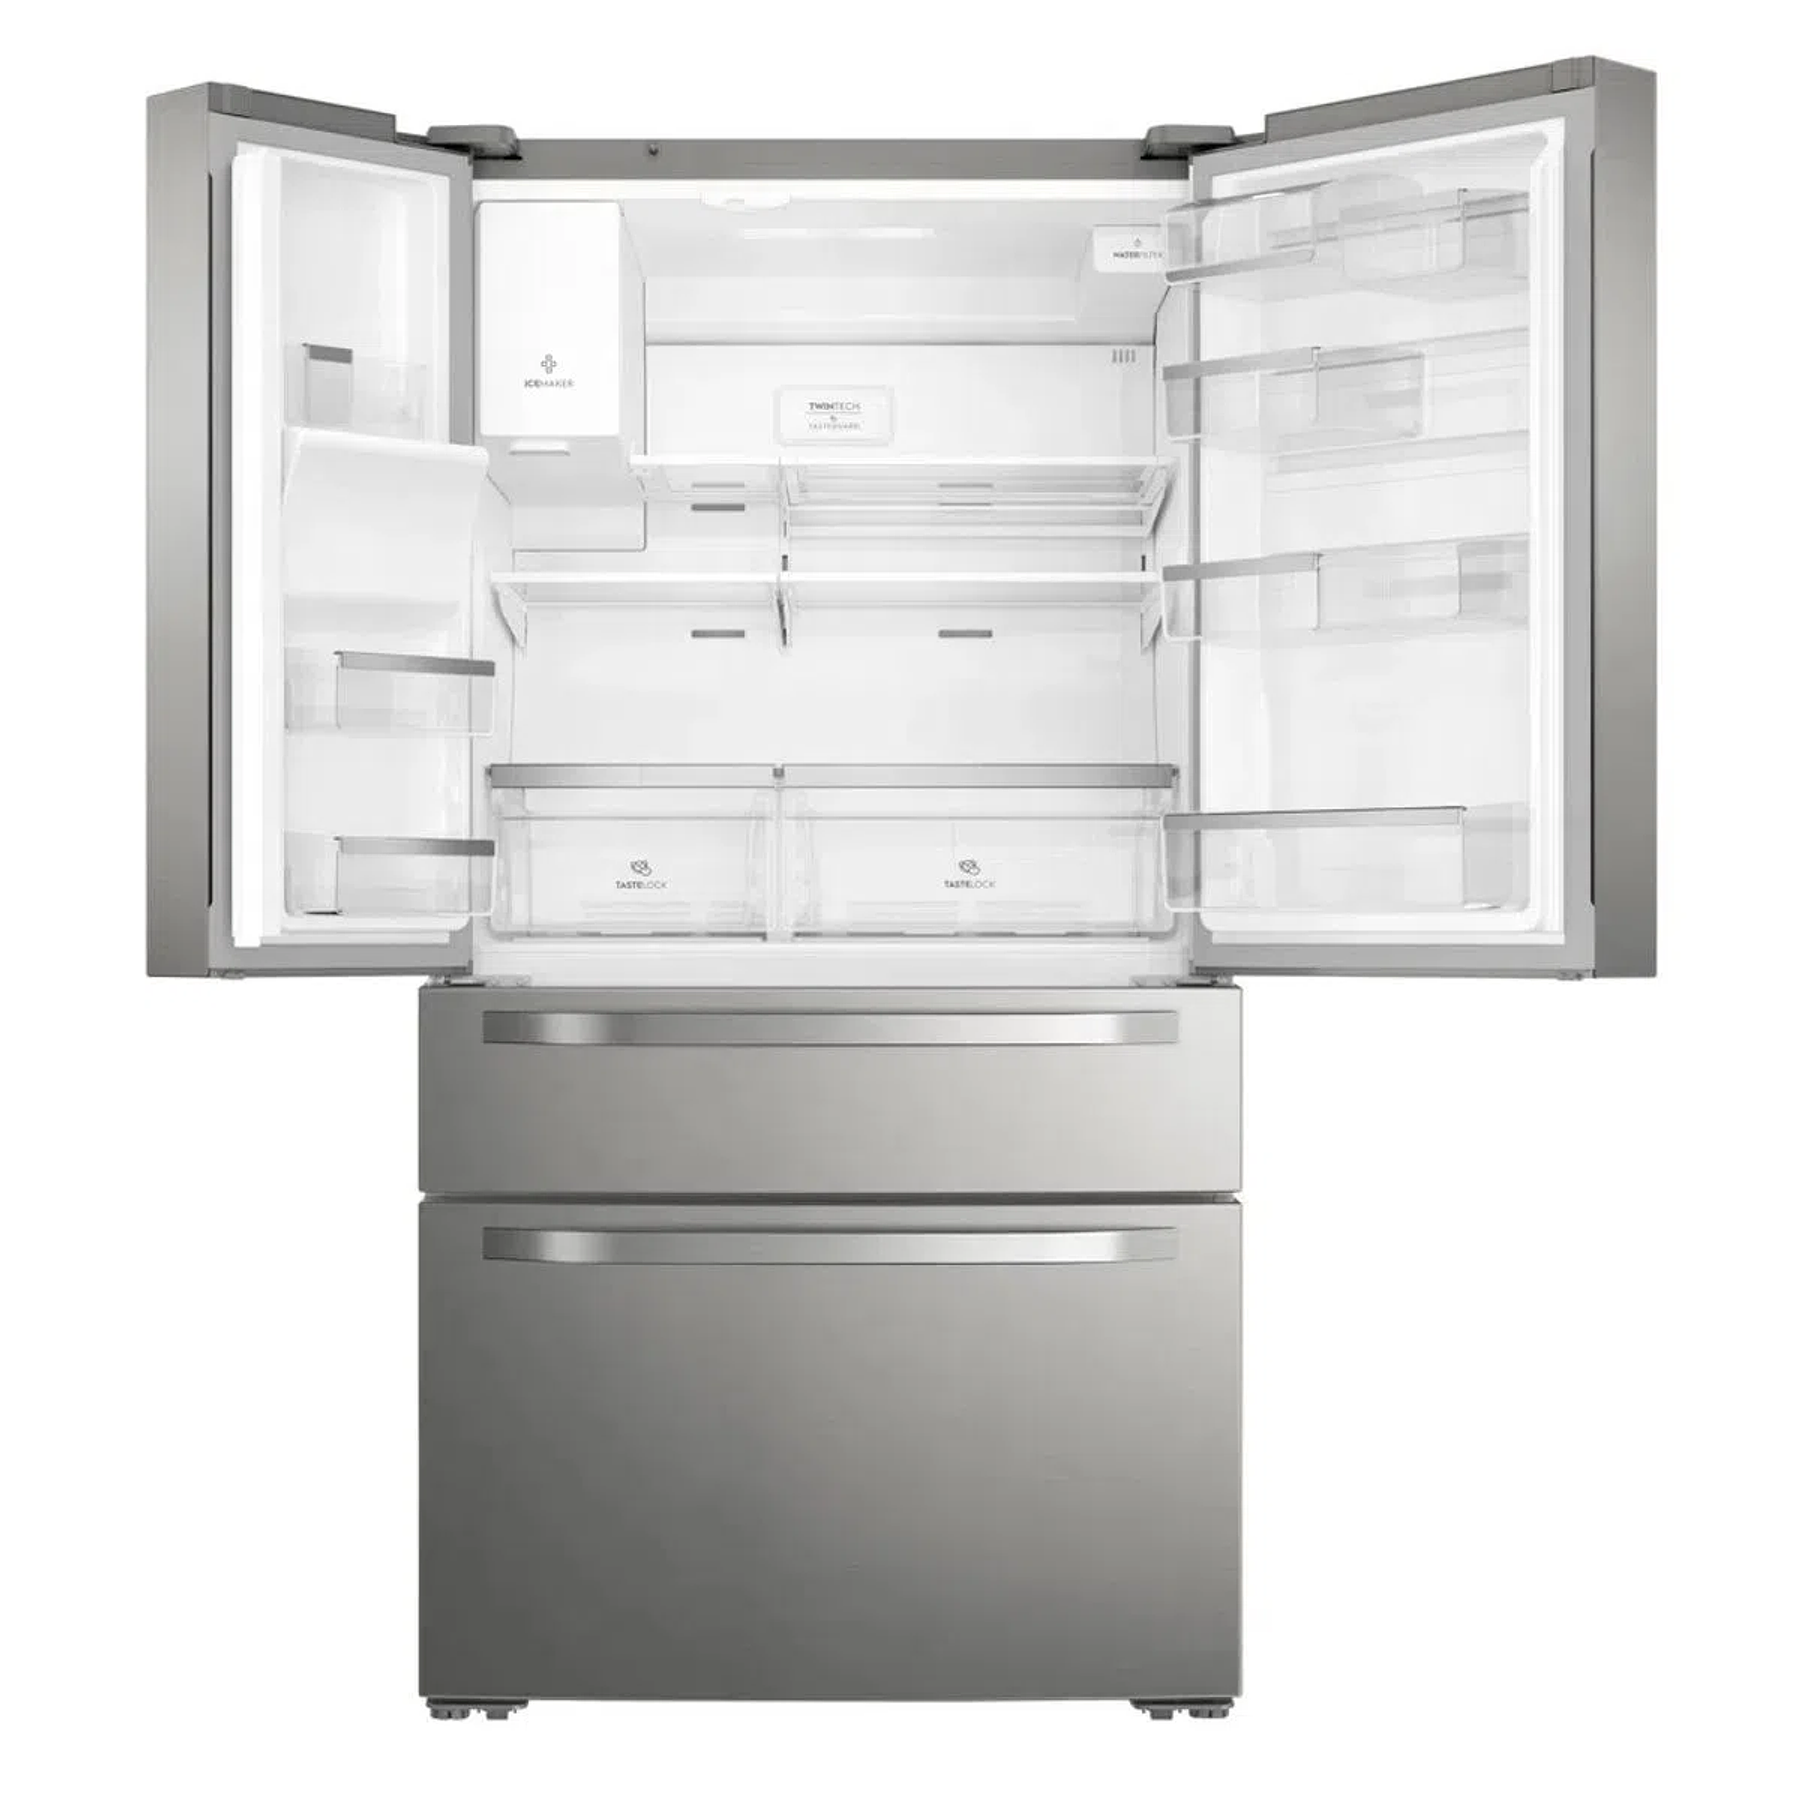 Refrigerador Fensa Advantage Plus 7790 540L No Frost Multidoor Inverter Fast Adapt Turbo Freezer Ice Twister